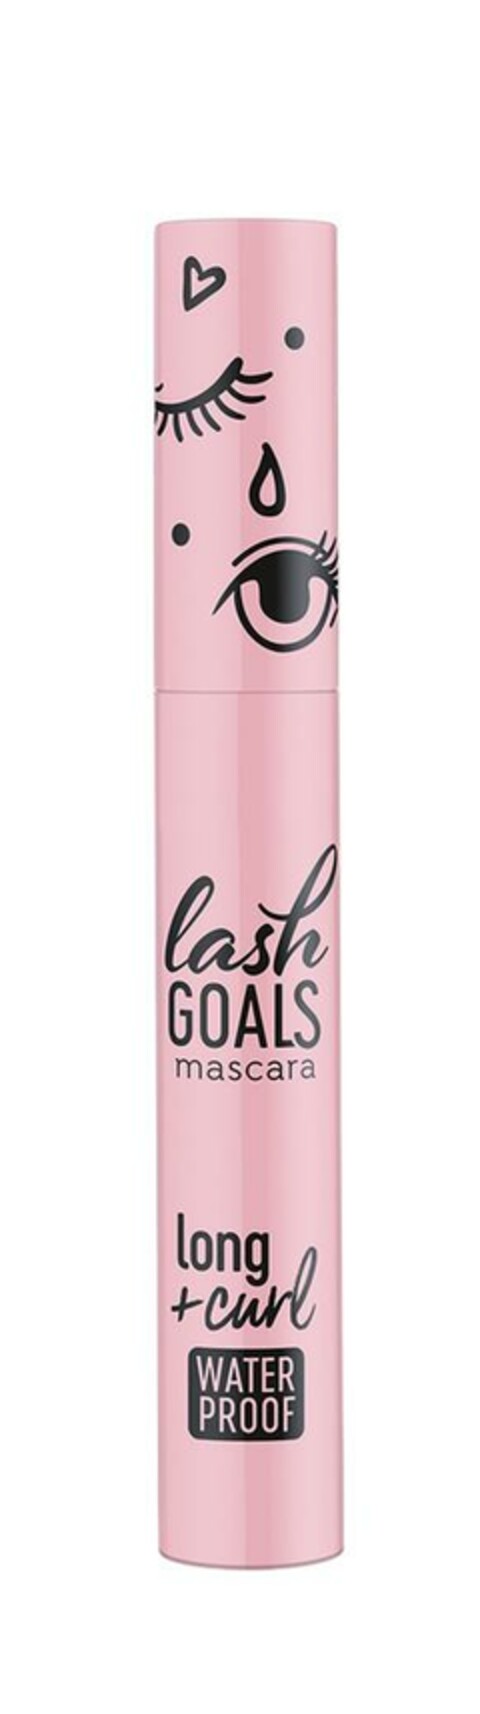 B lash GOALS mascara long + Curl WATER PROOF Logo (EUIPO, 16.05.2023)